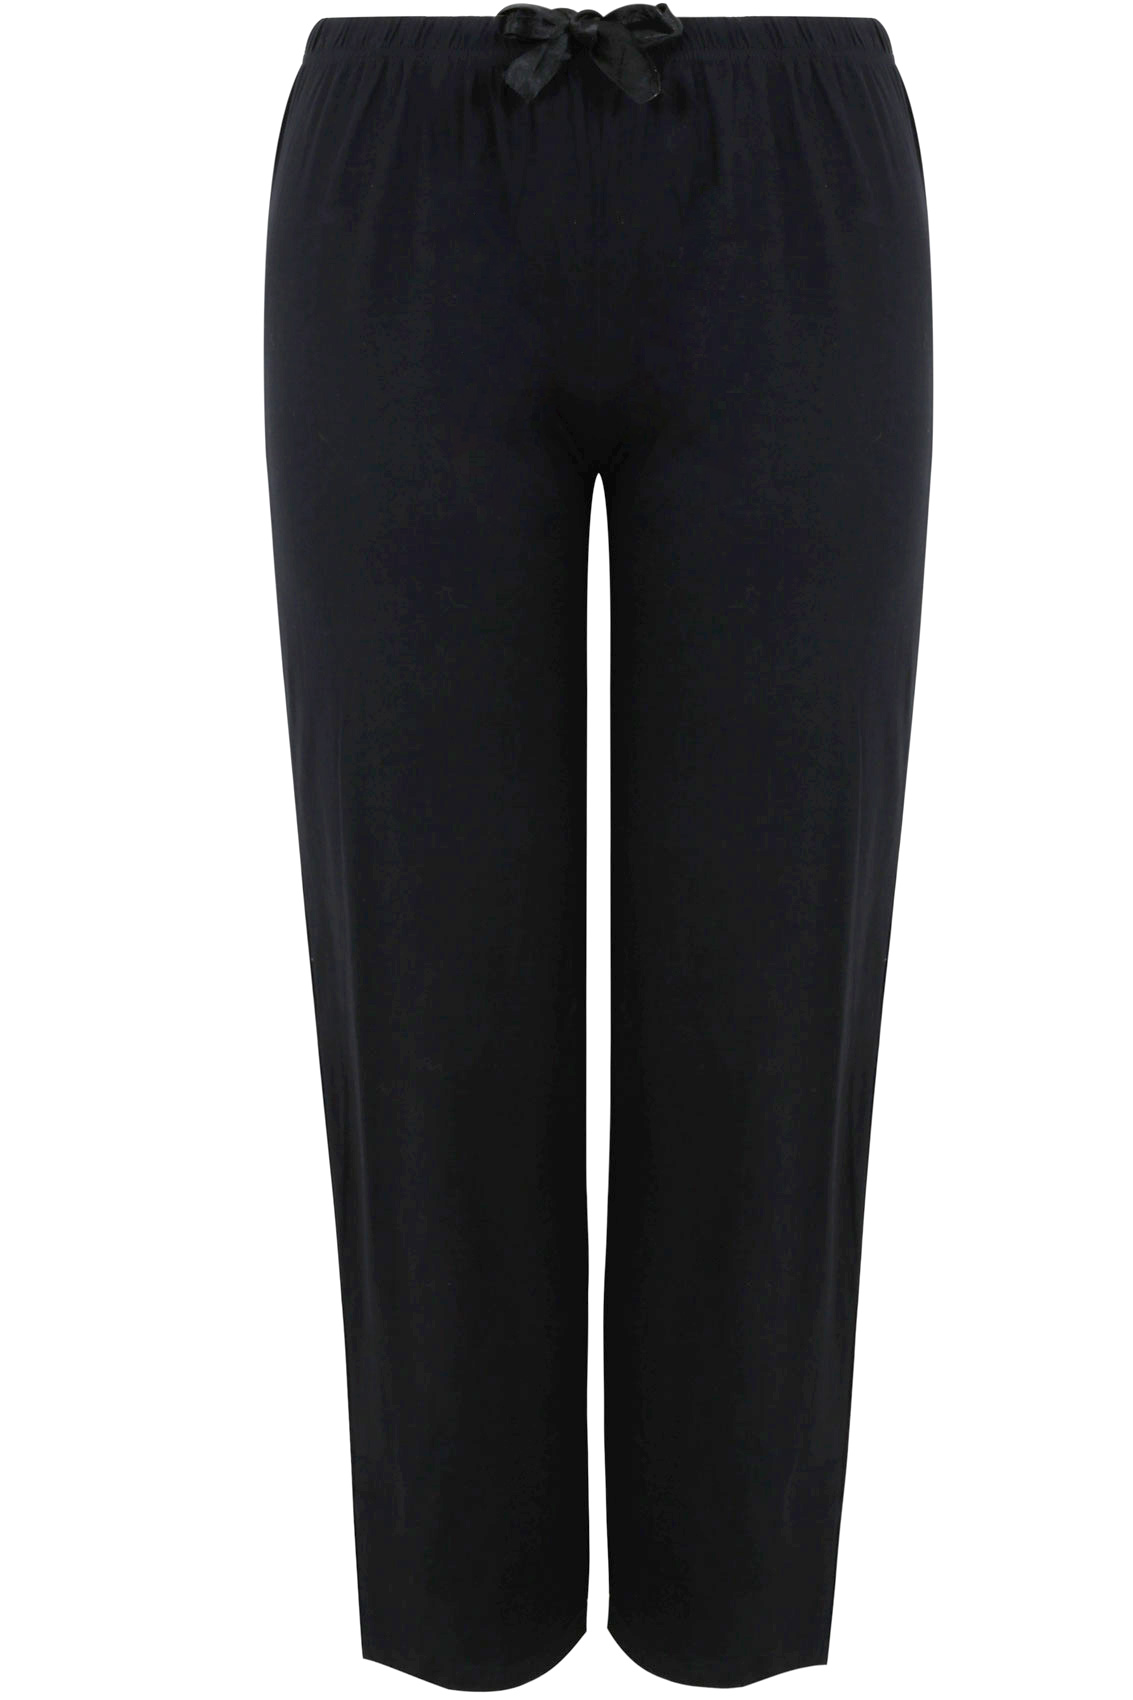 Plus Size Black Essential Cotton Pyjama Bottoms | Yours Clothing 3